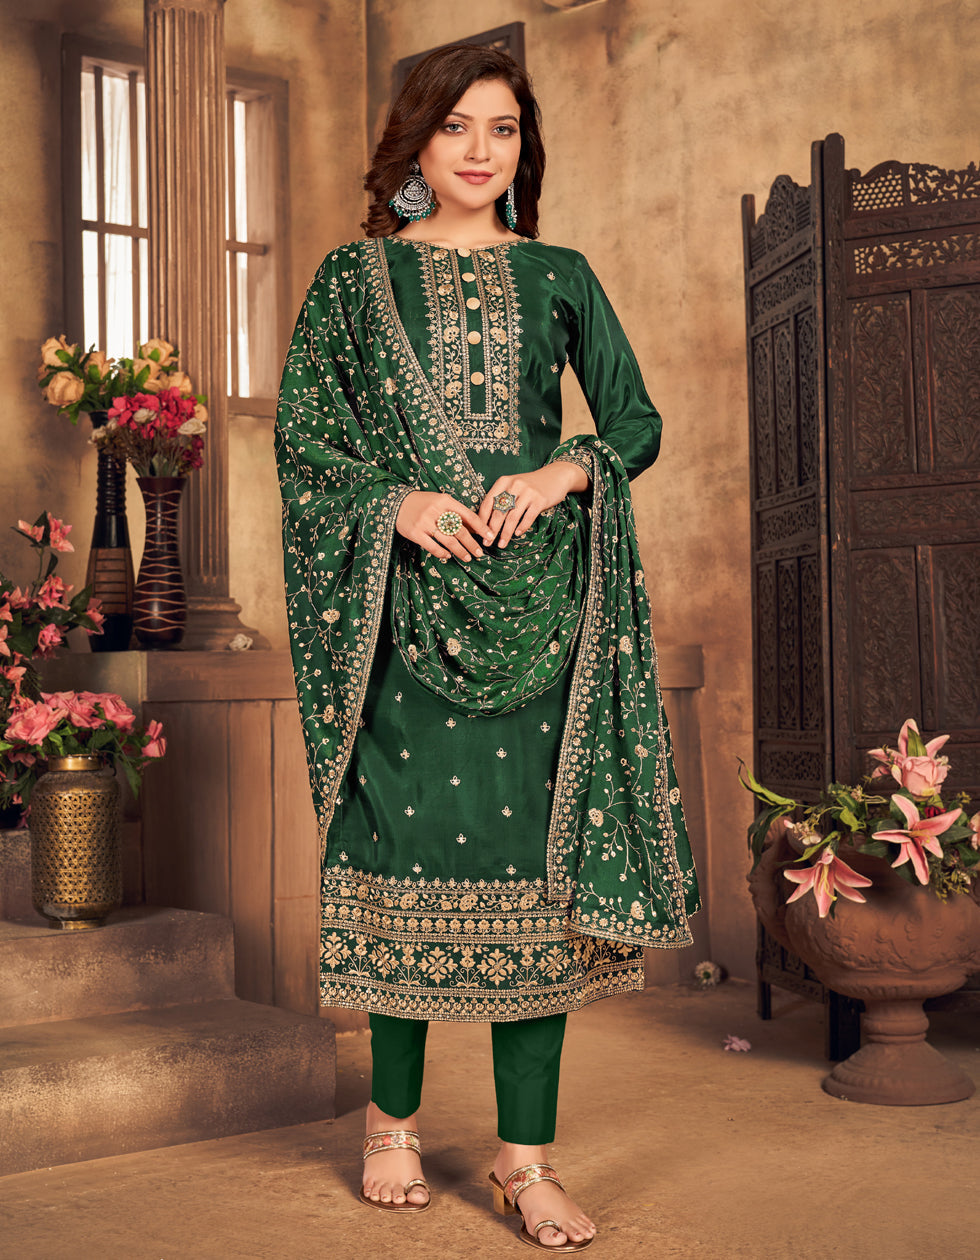 Green Salwar Suit - Buy Green Salwar Kameez Online USA